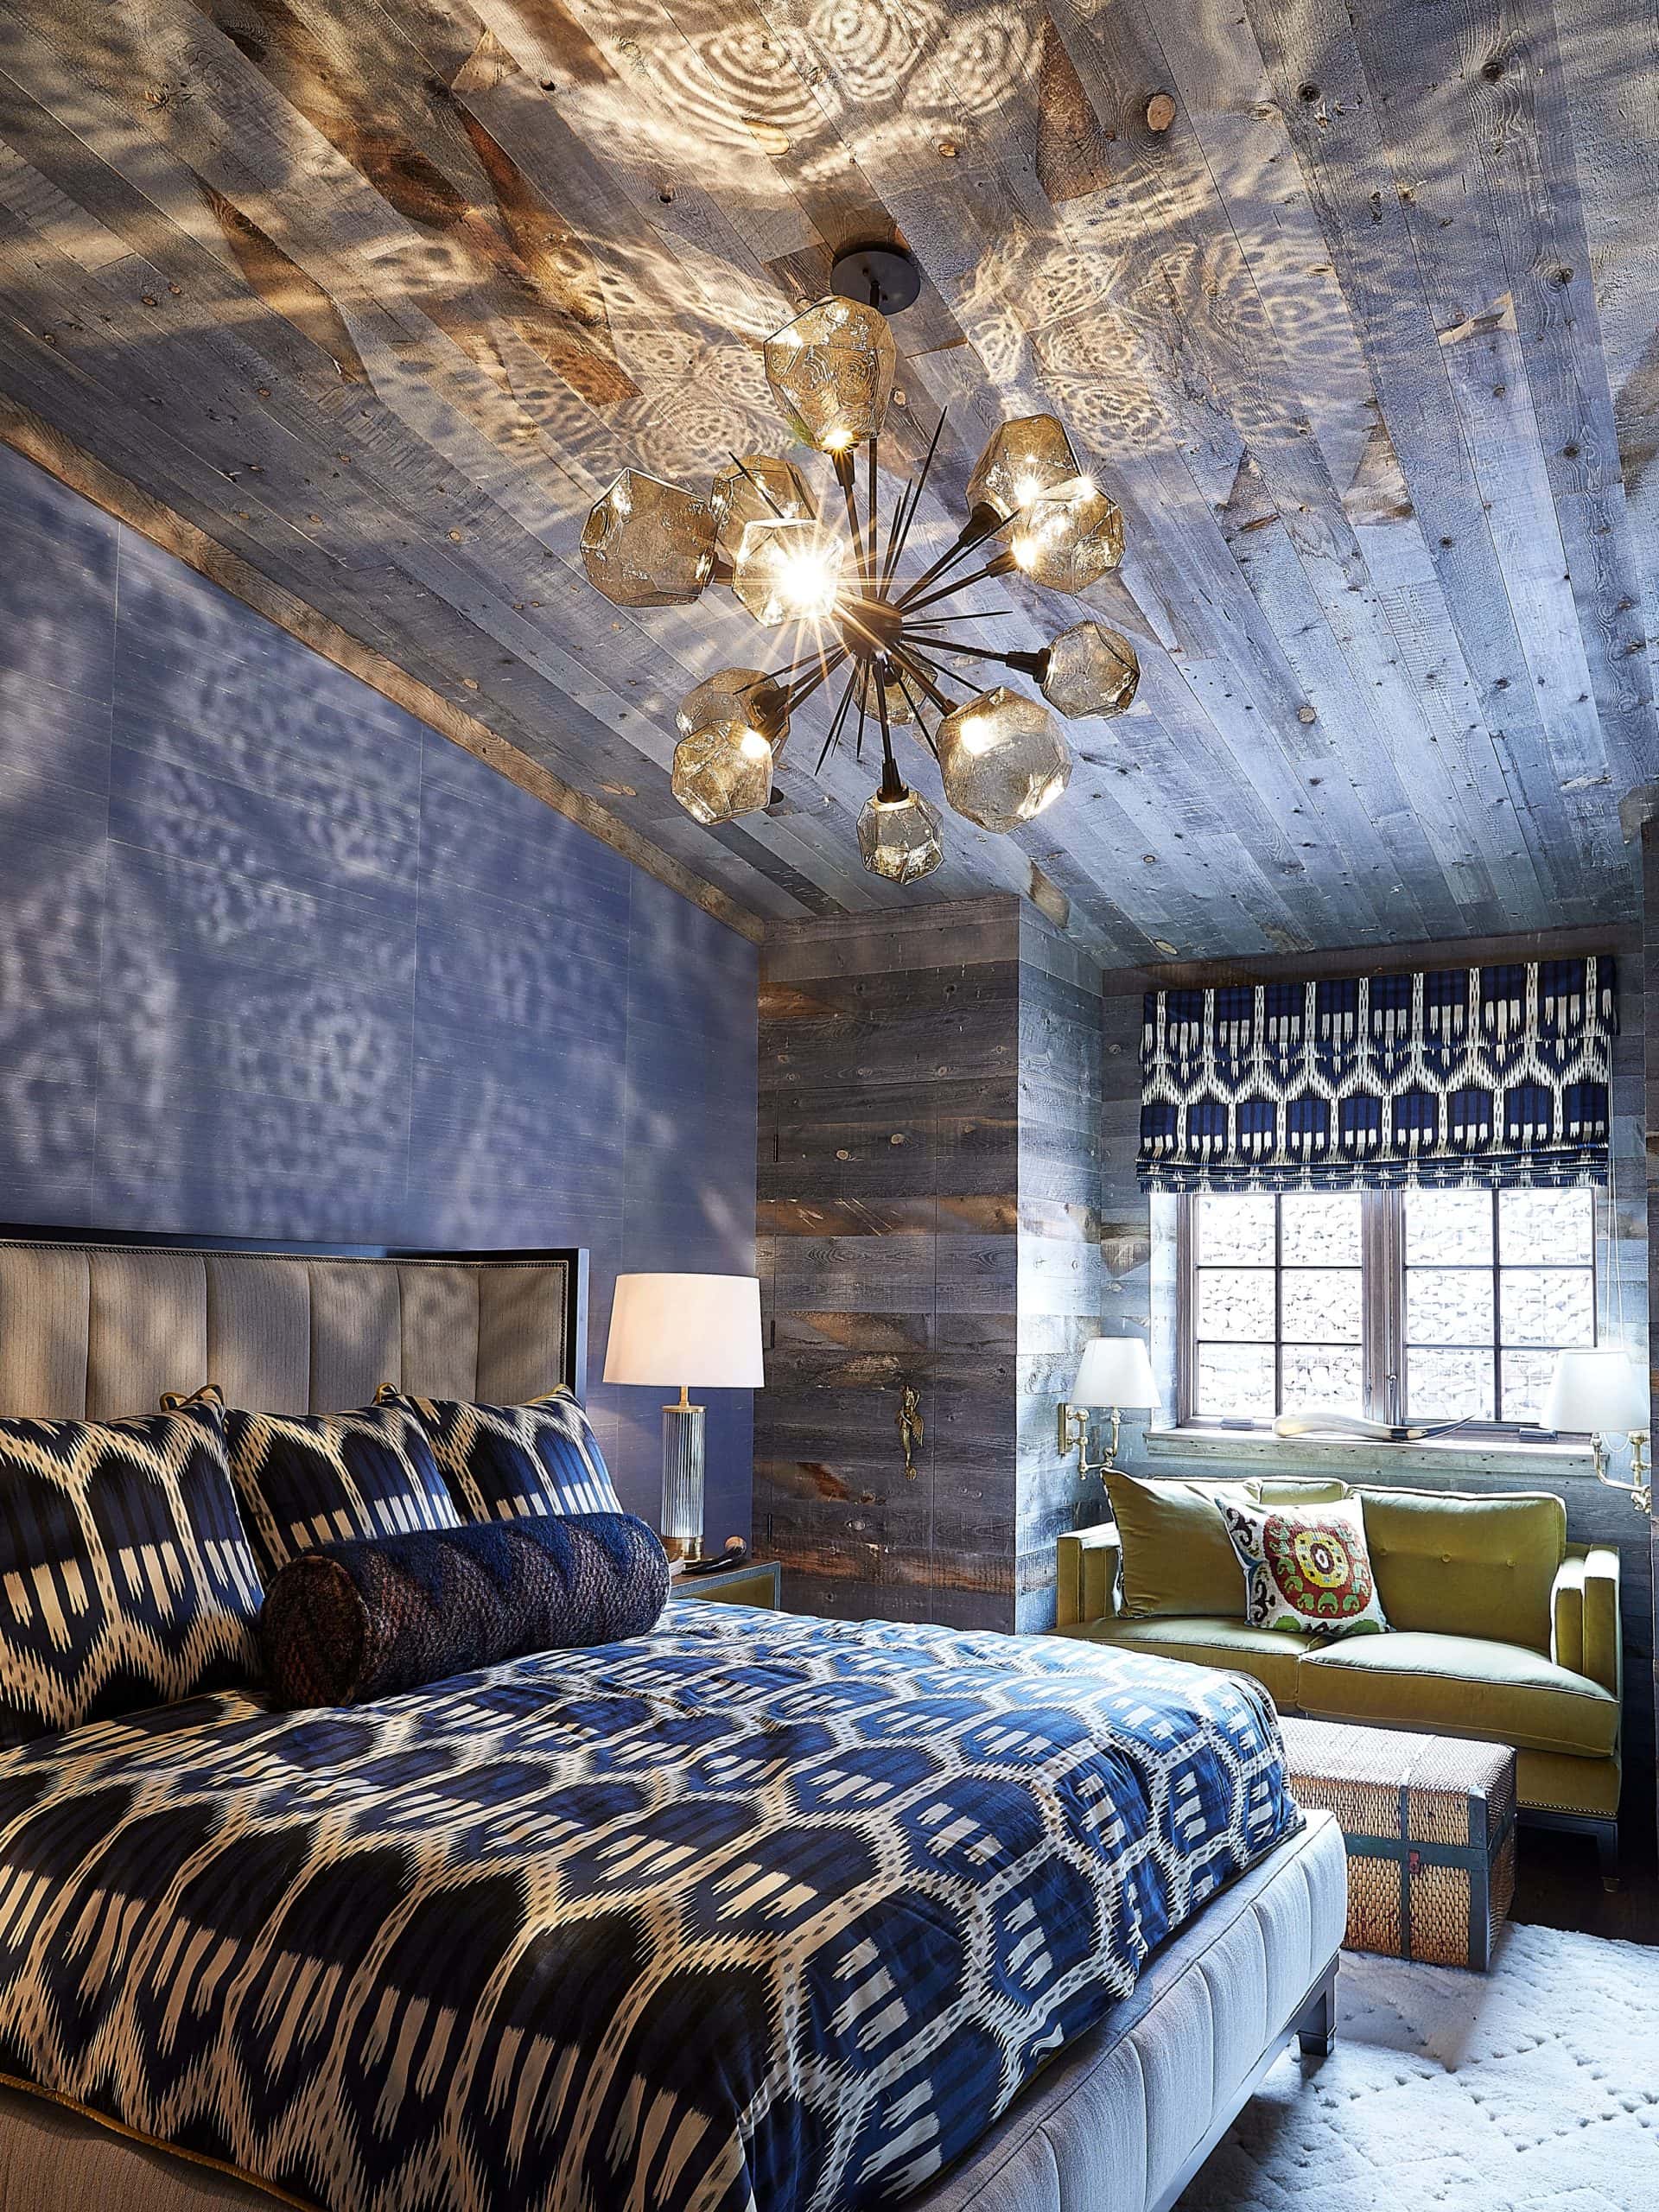 Geometric globe sputnik chandelier lit up and refracting on barn wood covered ceiling in master bedroom